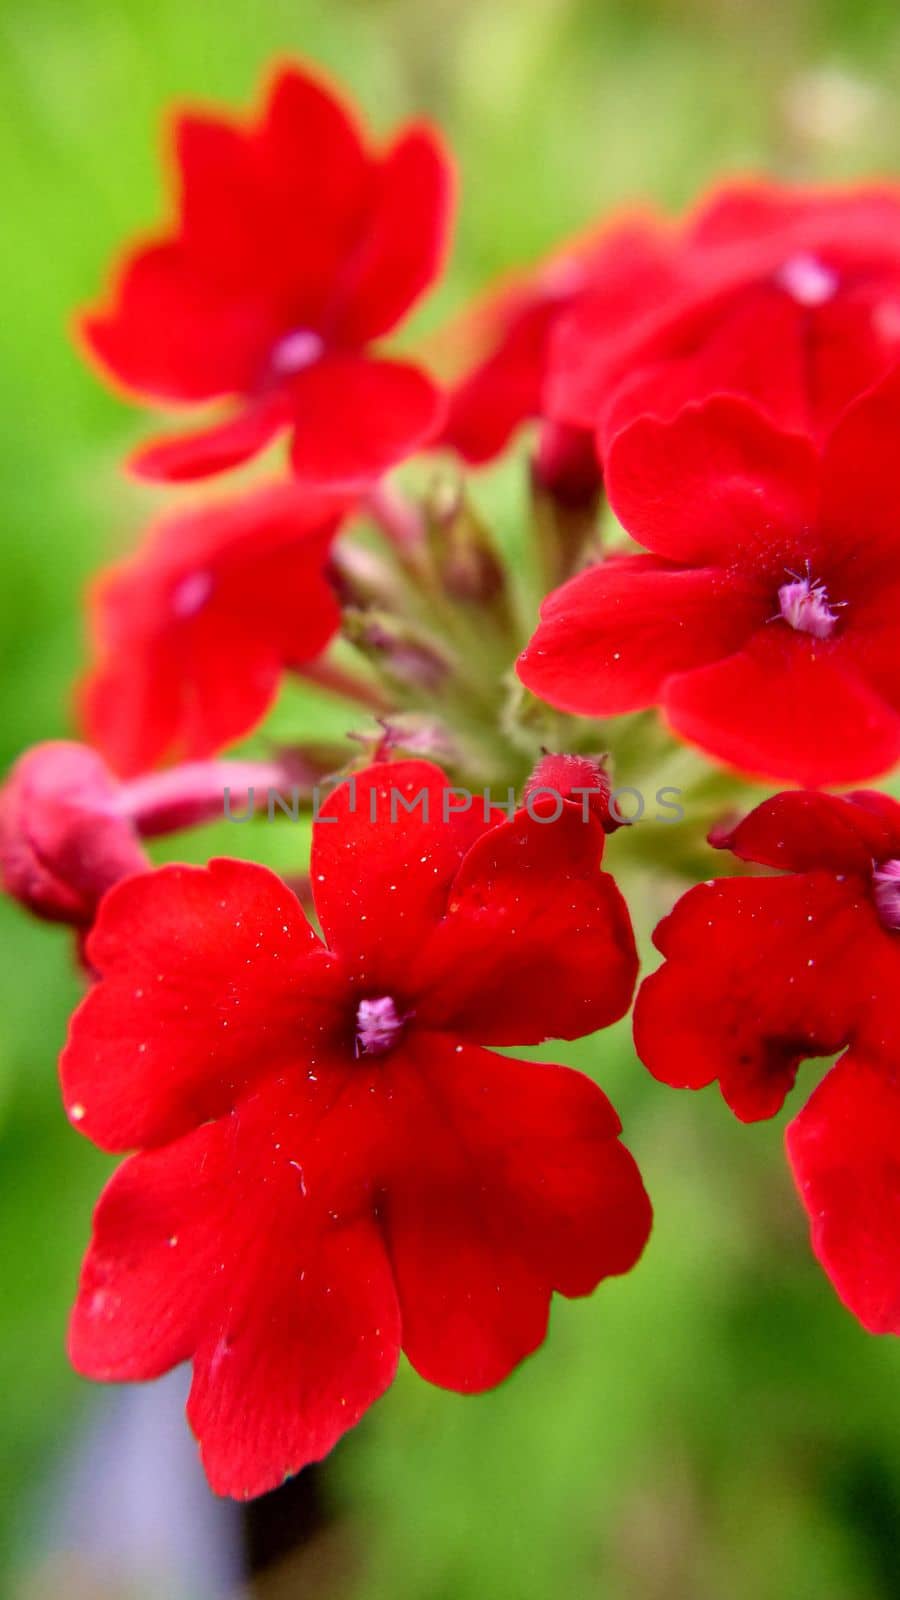 Bright red verbena flowers bloom in the garden by Mastak80